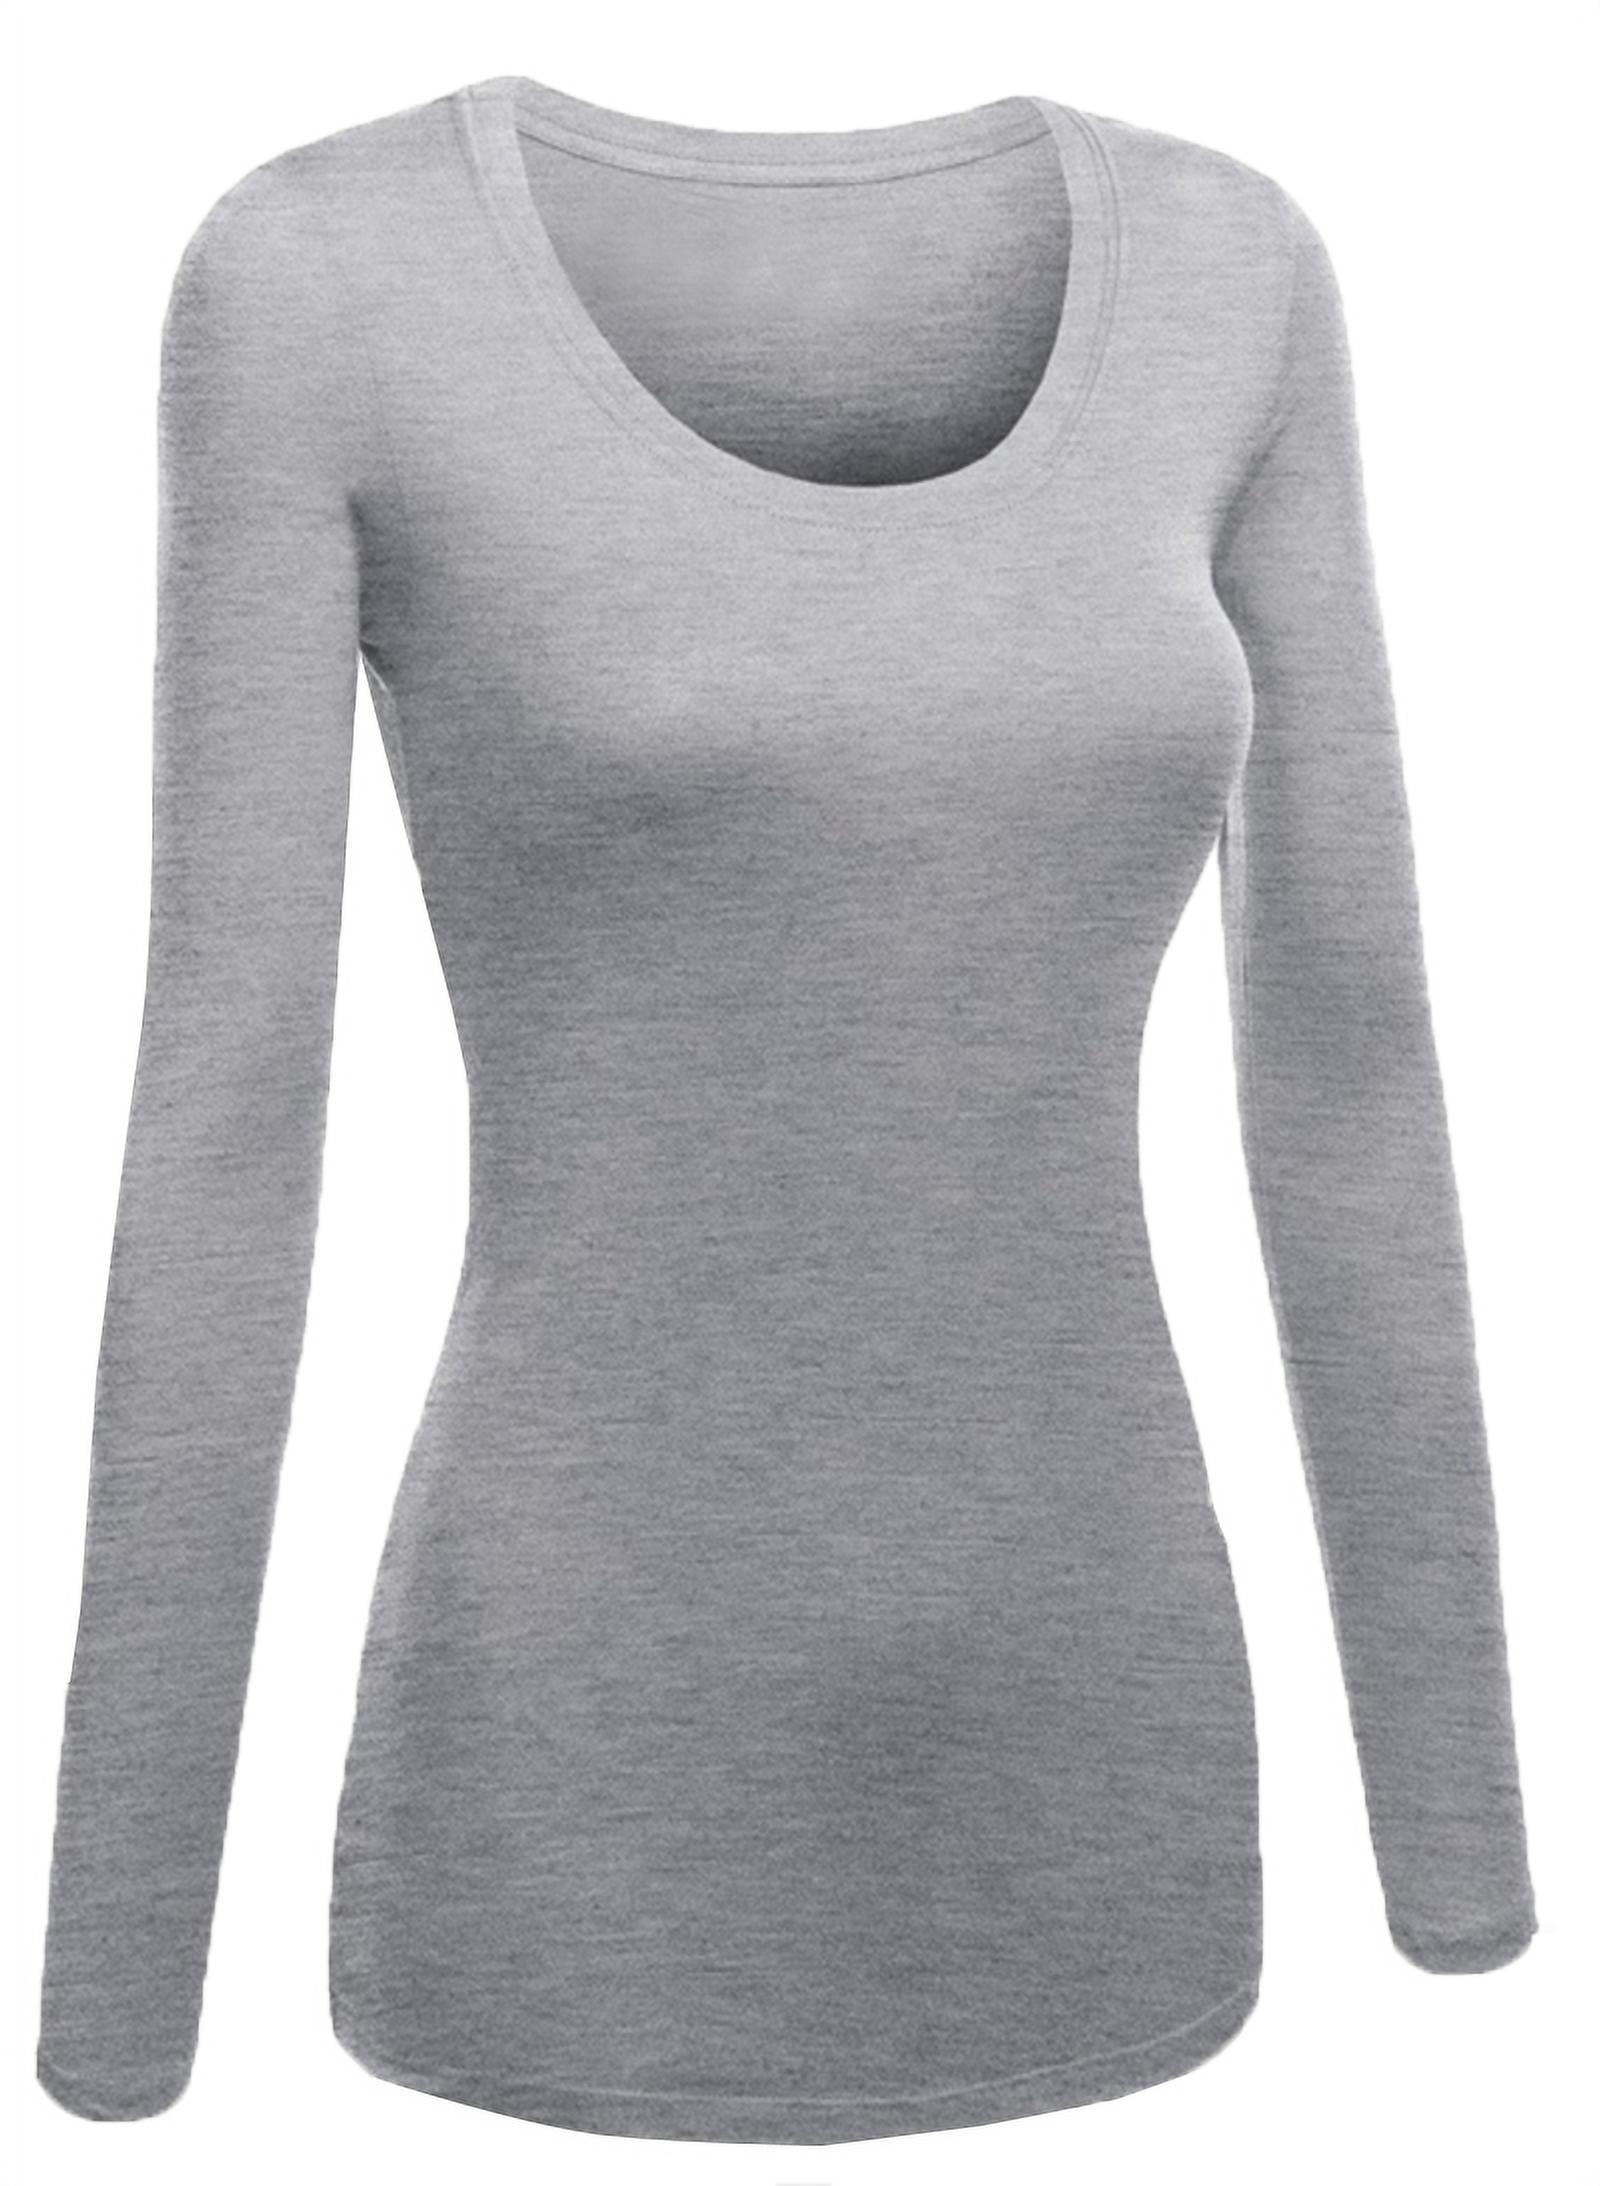 Emmalise Women's Plain Basic Scoop Neck Long Sleeve TShirt Tee - H Gray ...